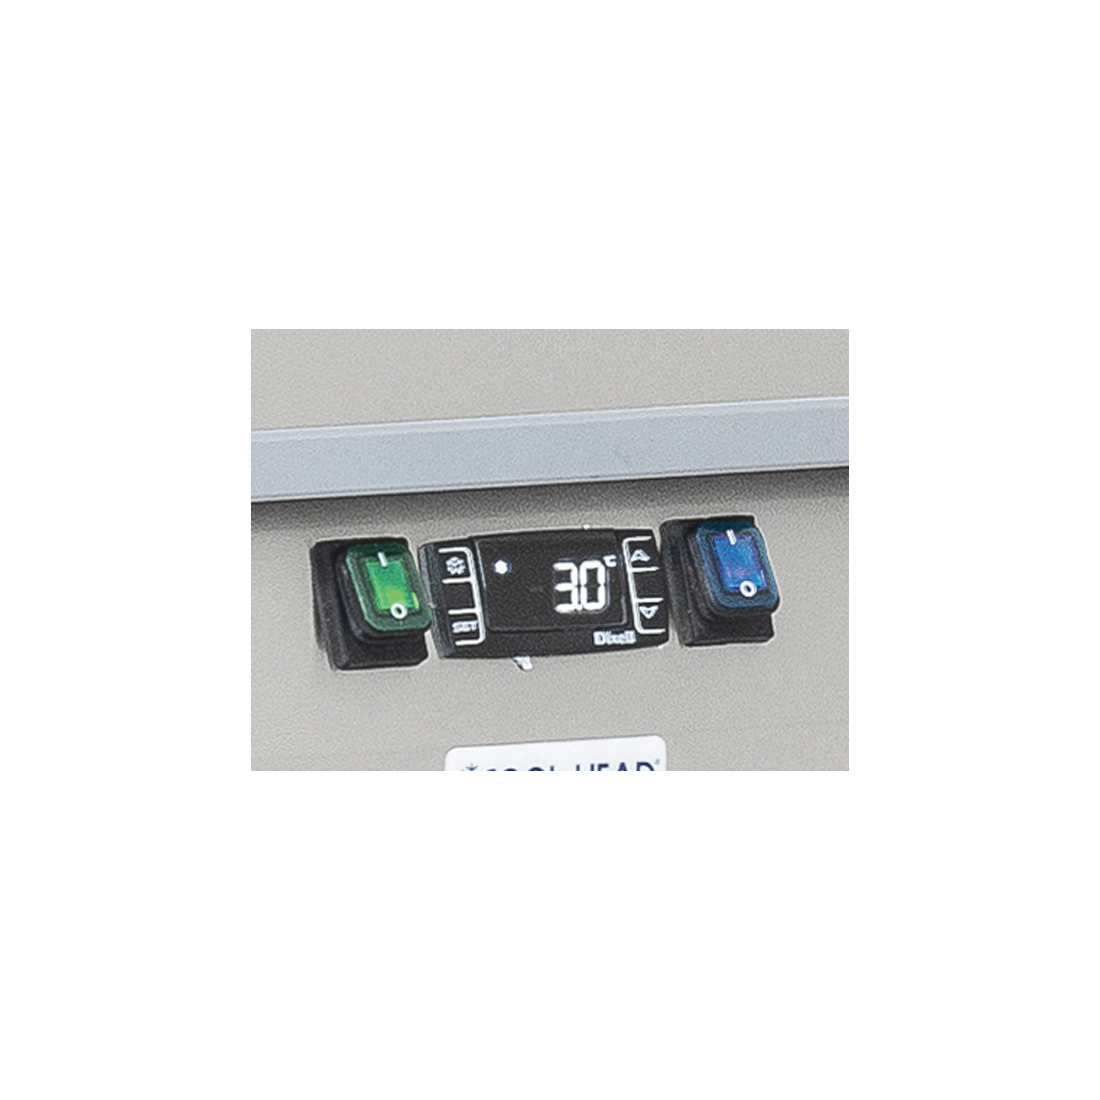 COOL HEAD ,QRG3100, 3 Glass Door Chiller Counter|mkayn|مكاين